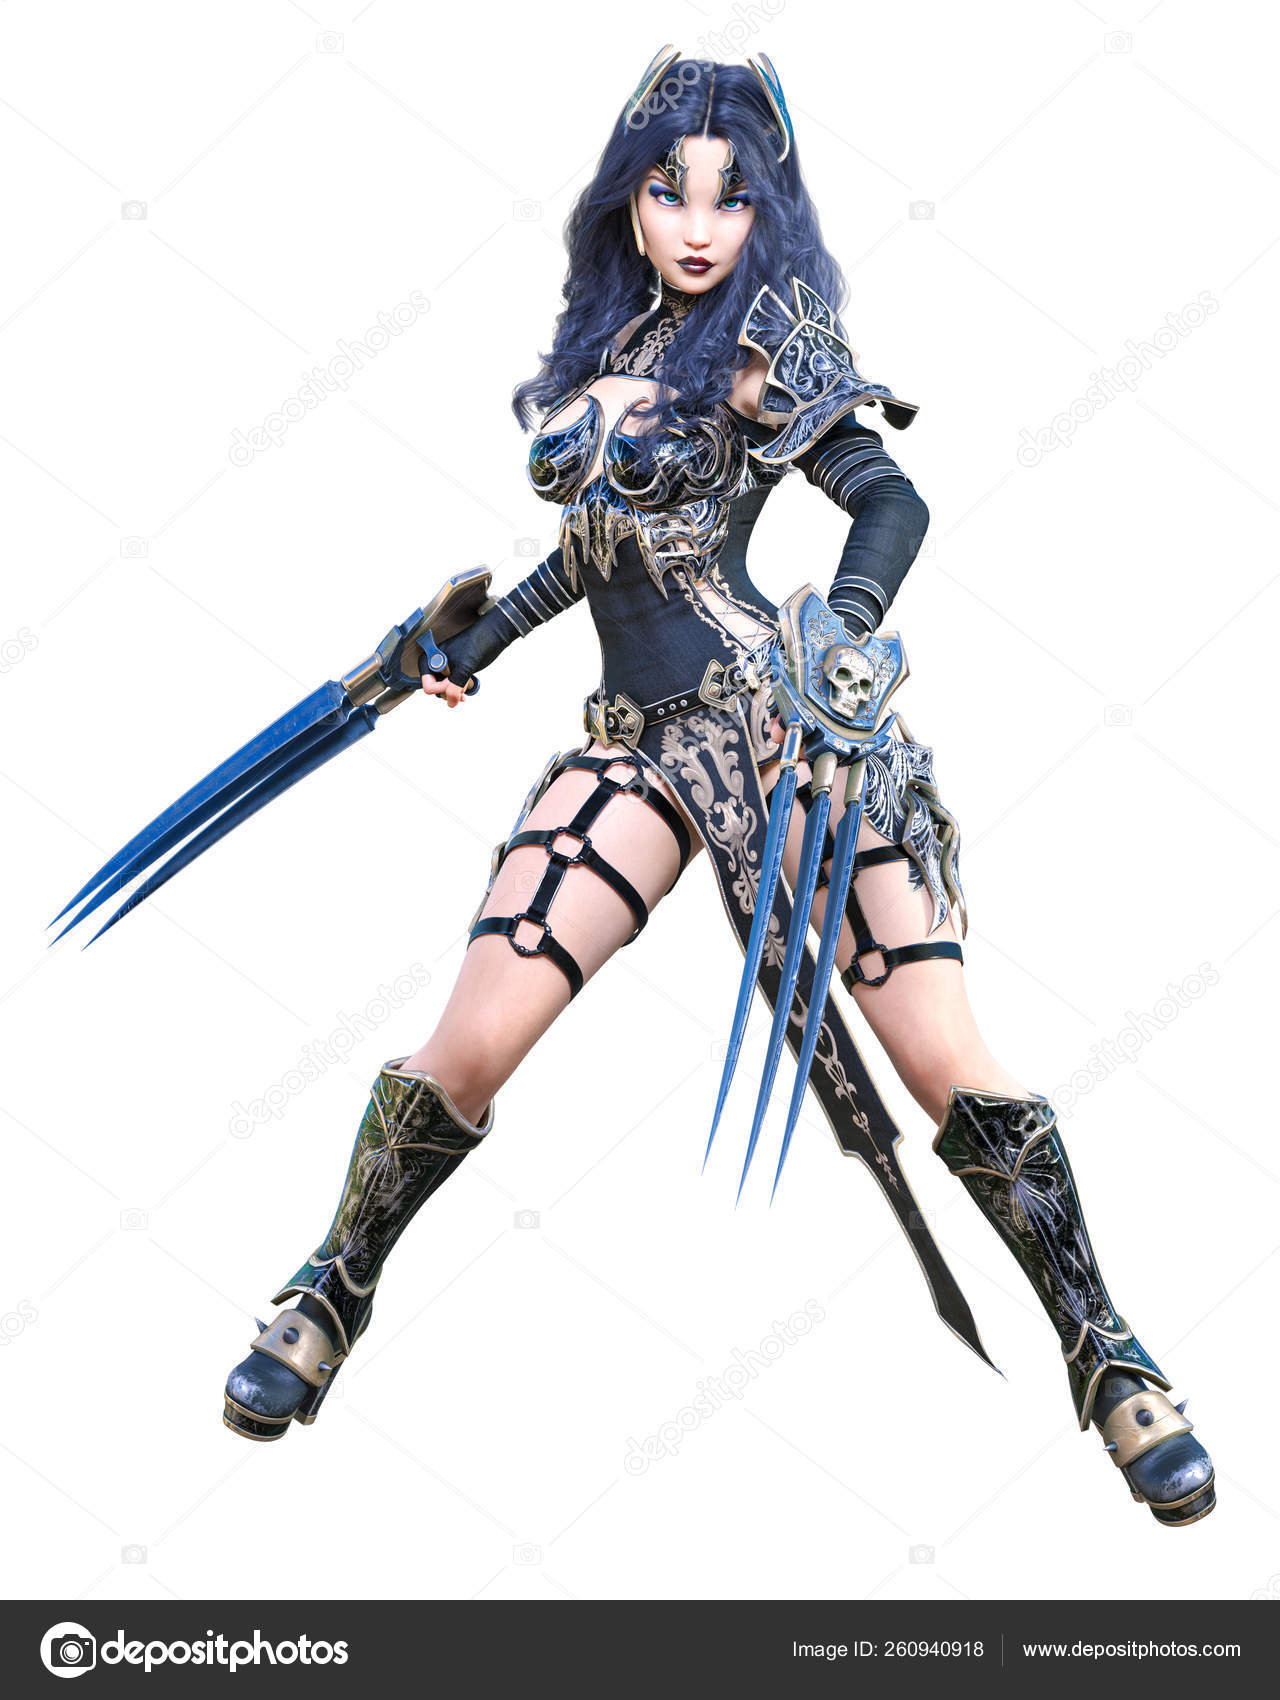 dim-llama911: Female paldin holding sword in battle